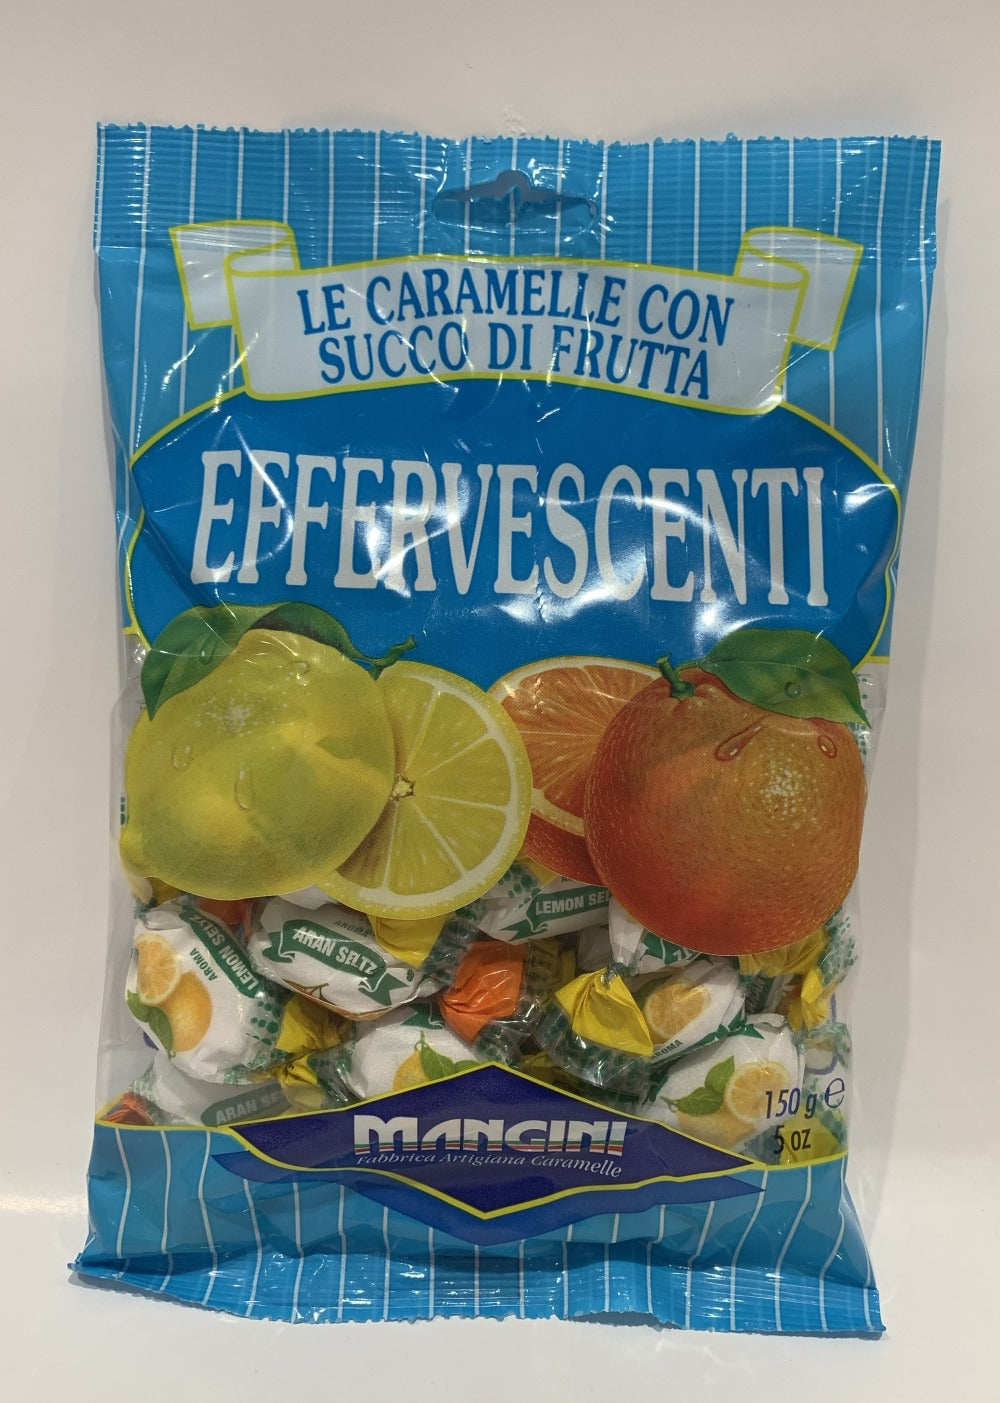 Mangini - Effeverscenti - 150g (5.29 oz)